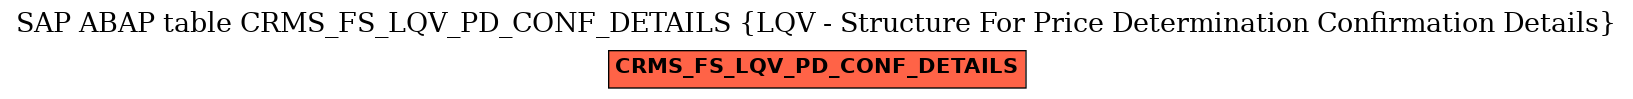 E-R Diagram for table CRMS_FS_LQV_PD_CONF_DETAILS (LQV - Structure For Price Determination Confirmation Details)